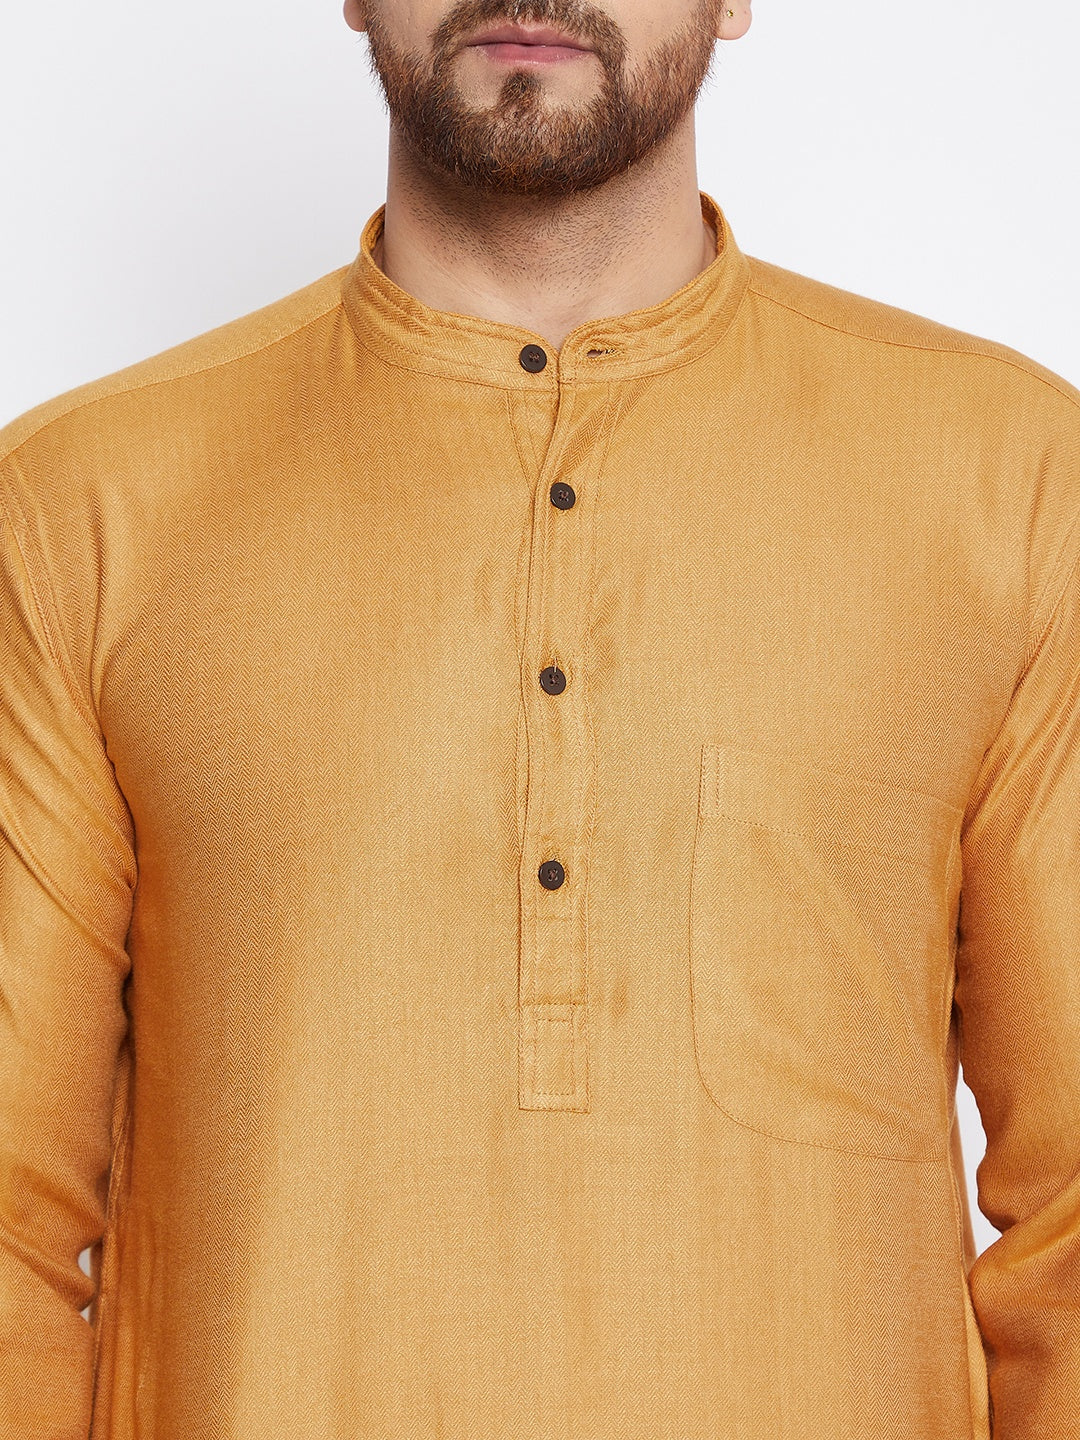 Men's Woven Design Yellow Straight Kurta - Even Apparels